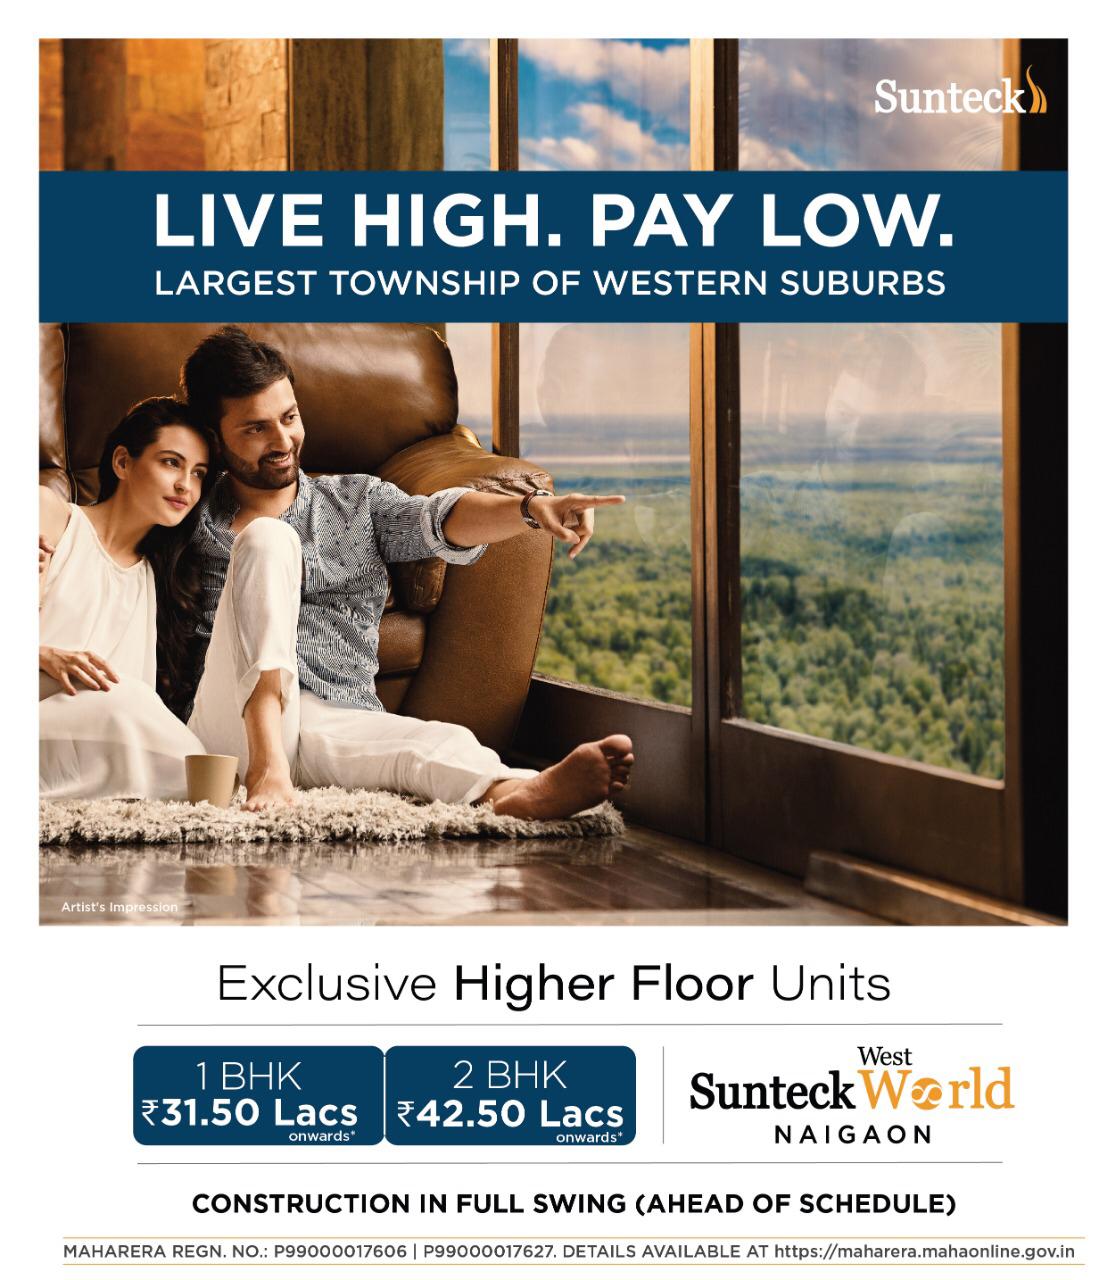 Exclusive higher floor units at Sunteck West World in Mumbai Update